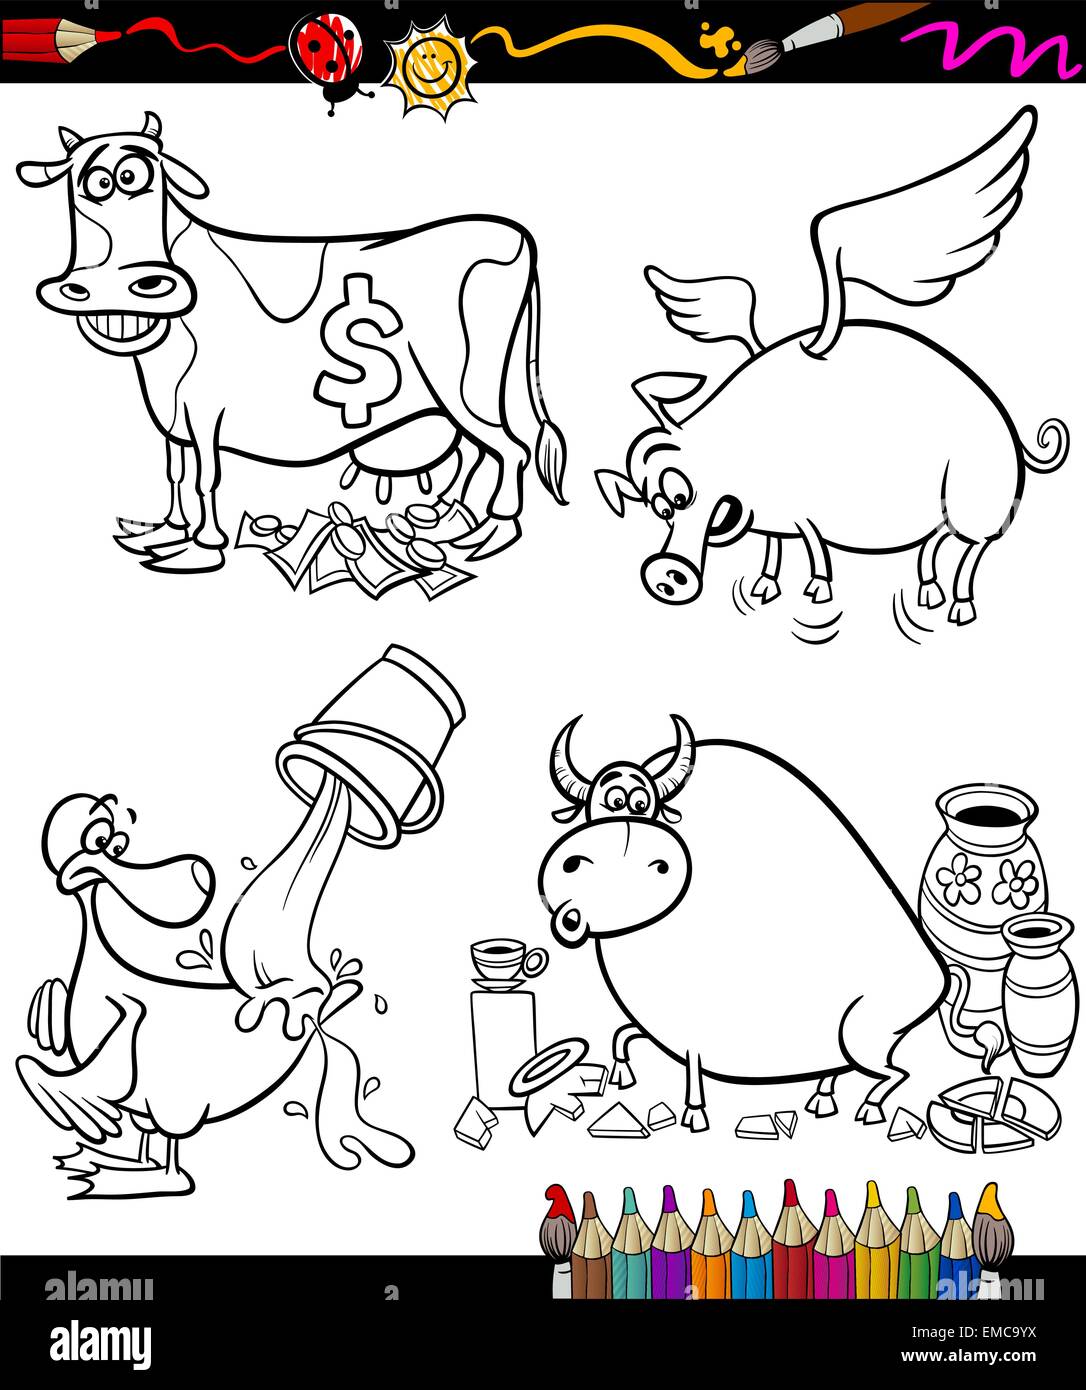 Sayings Cartoon Set for coloring book Stock Vector